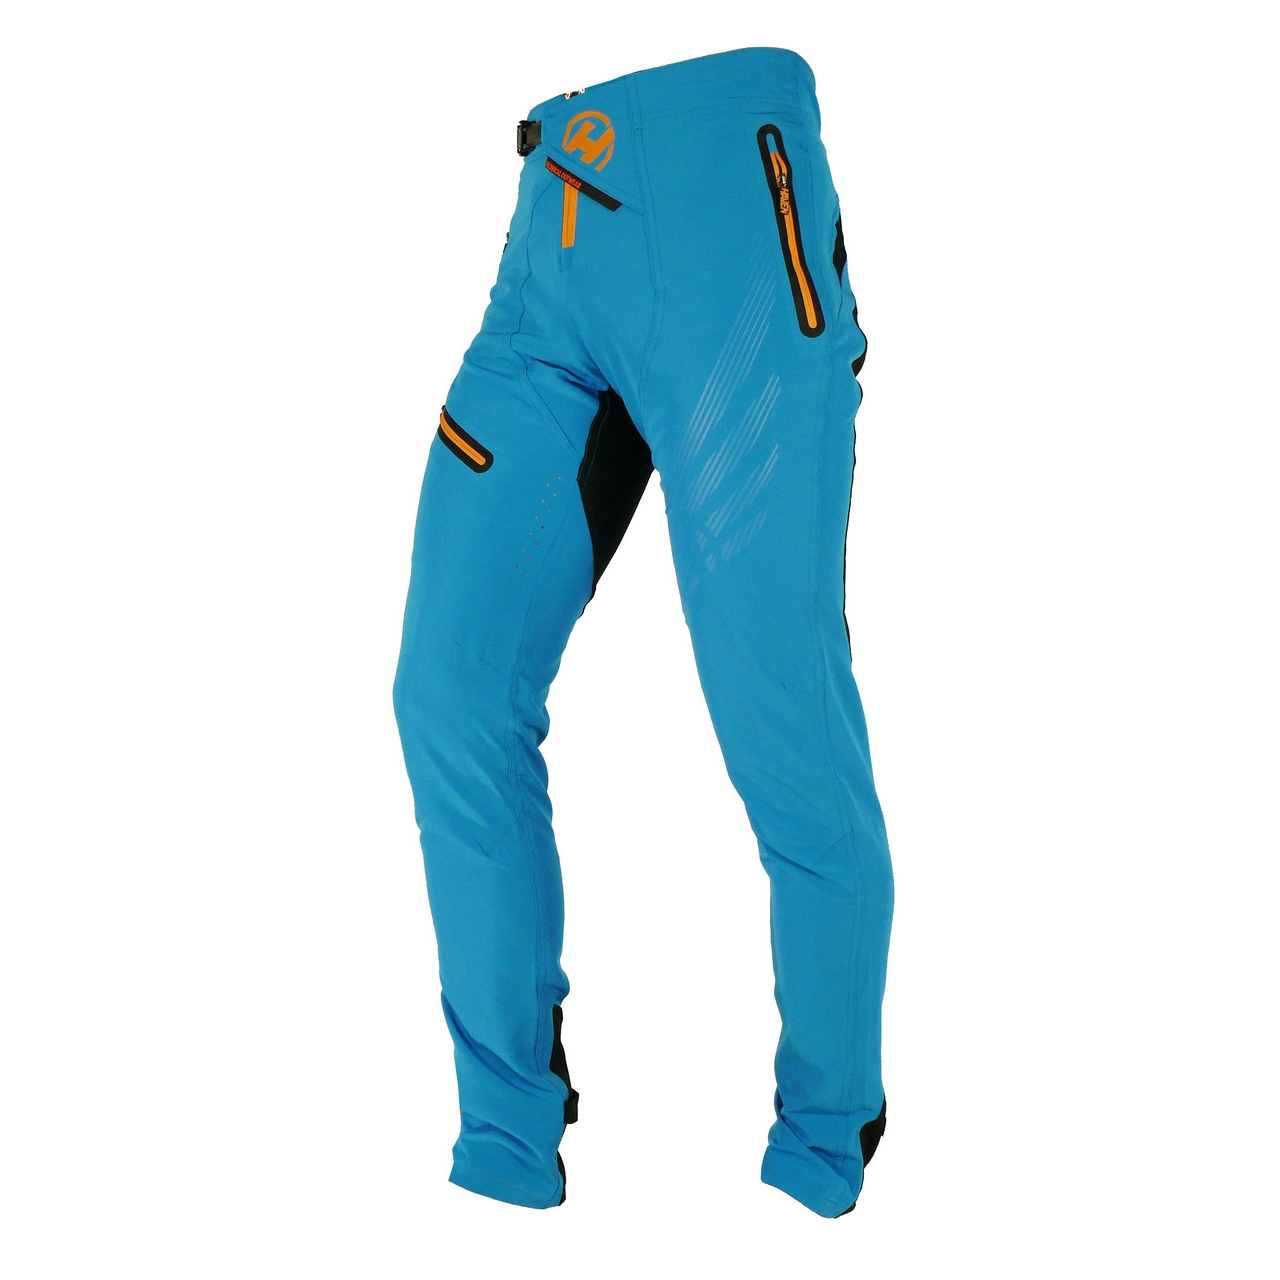 Kalhoty unisex Haven Energizer - modré-oranžové, 3XL